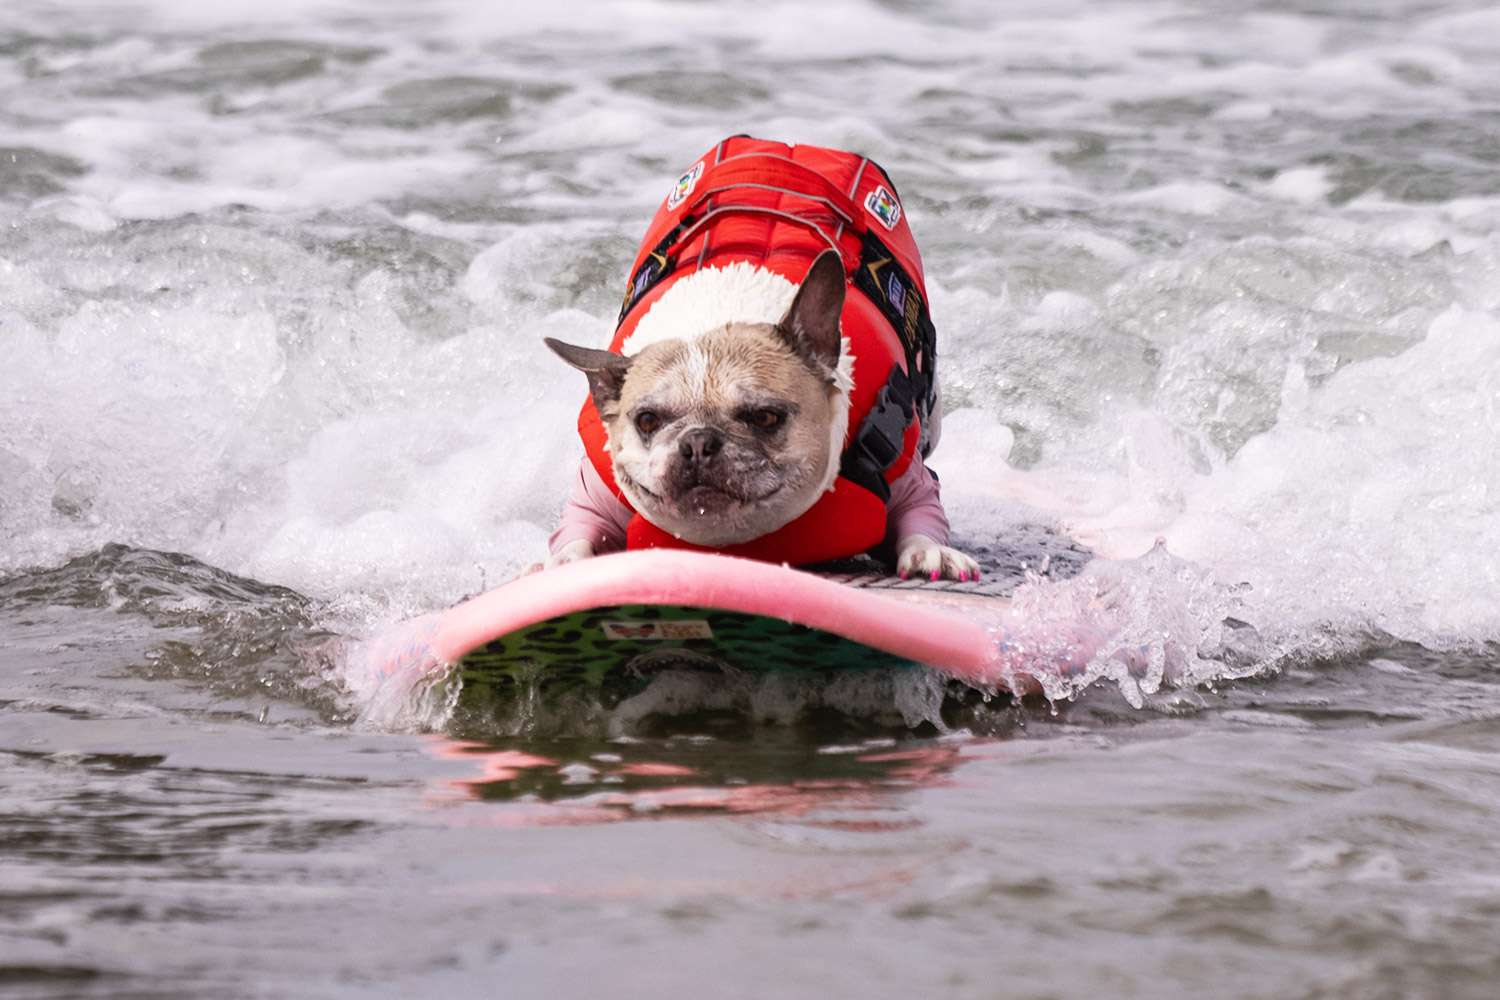 Dog surfing competition Huntington Huntington Beach